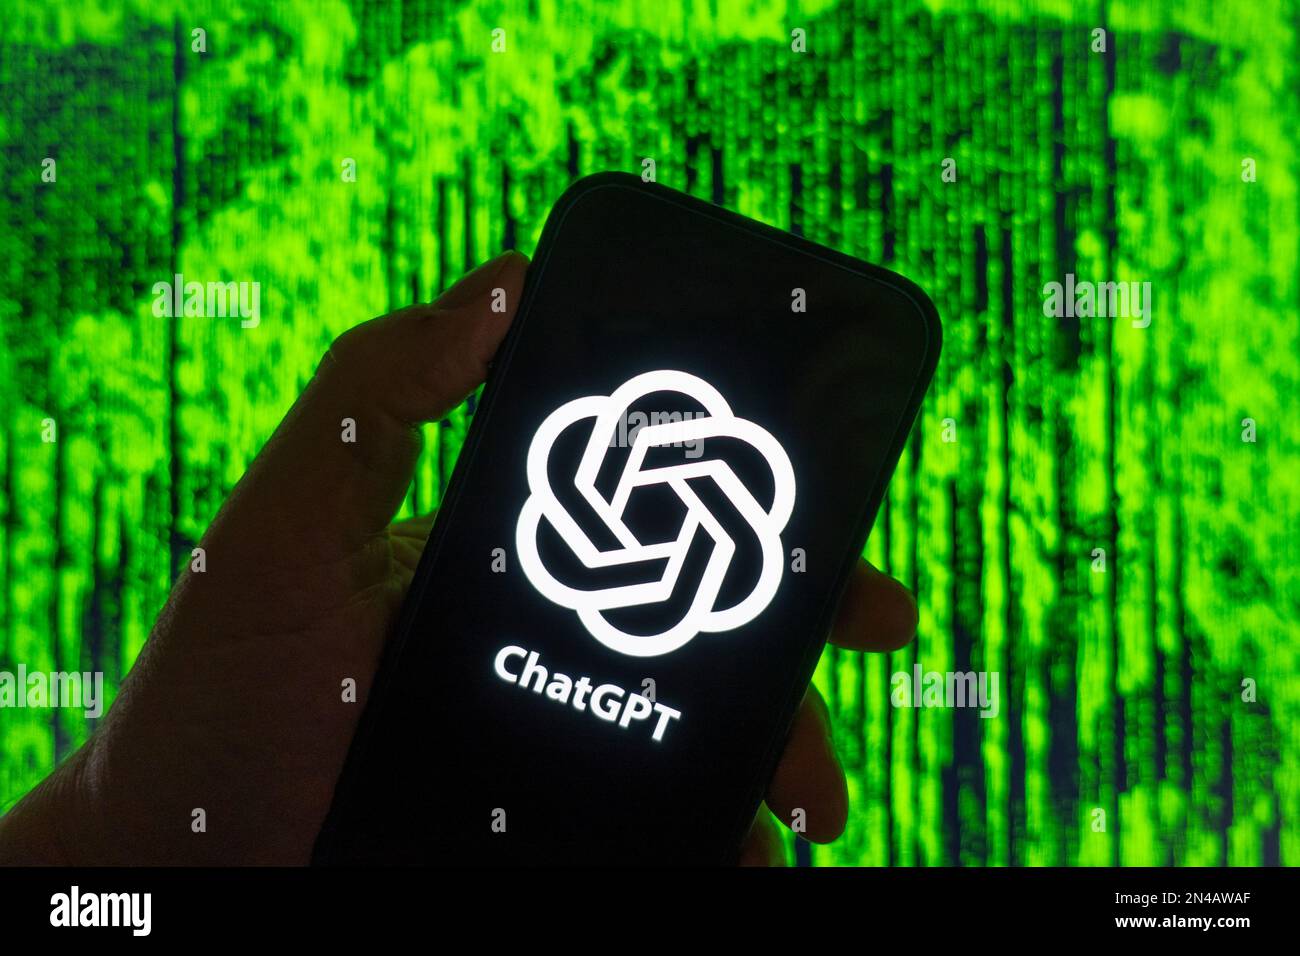 Digitales zusammengesetztes Bild des OpenAI ChatGPT-Chatbot-Logos auf dem Mobiltelefon Stockfoto